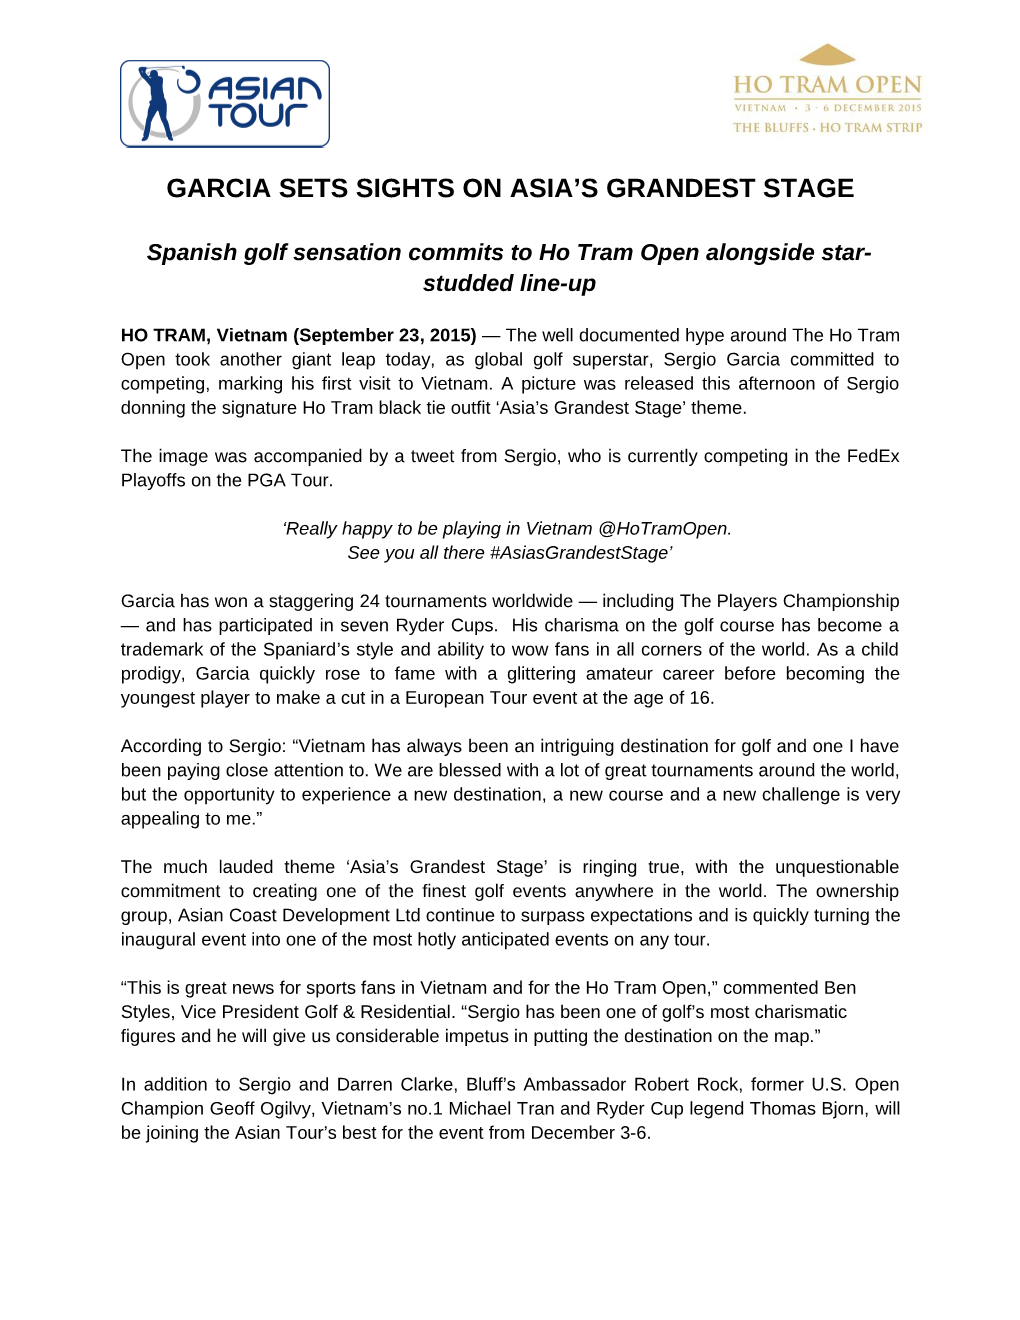 Garcia Sets Sights on Asia S Grandest Stage